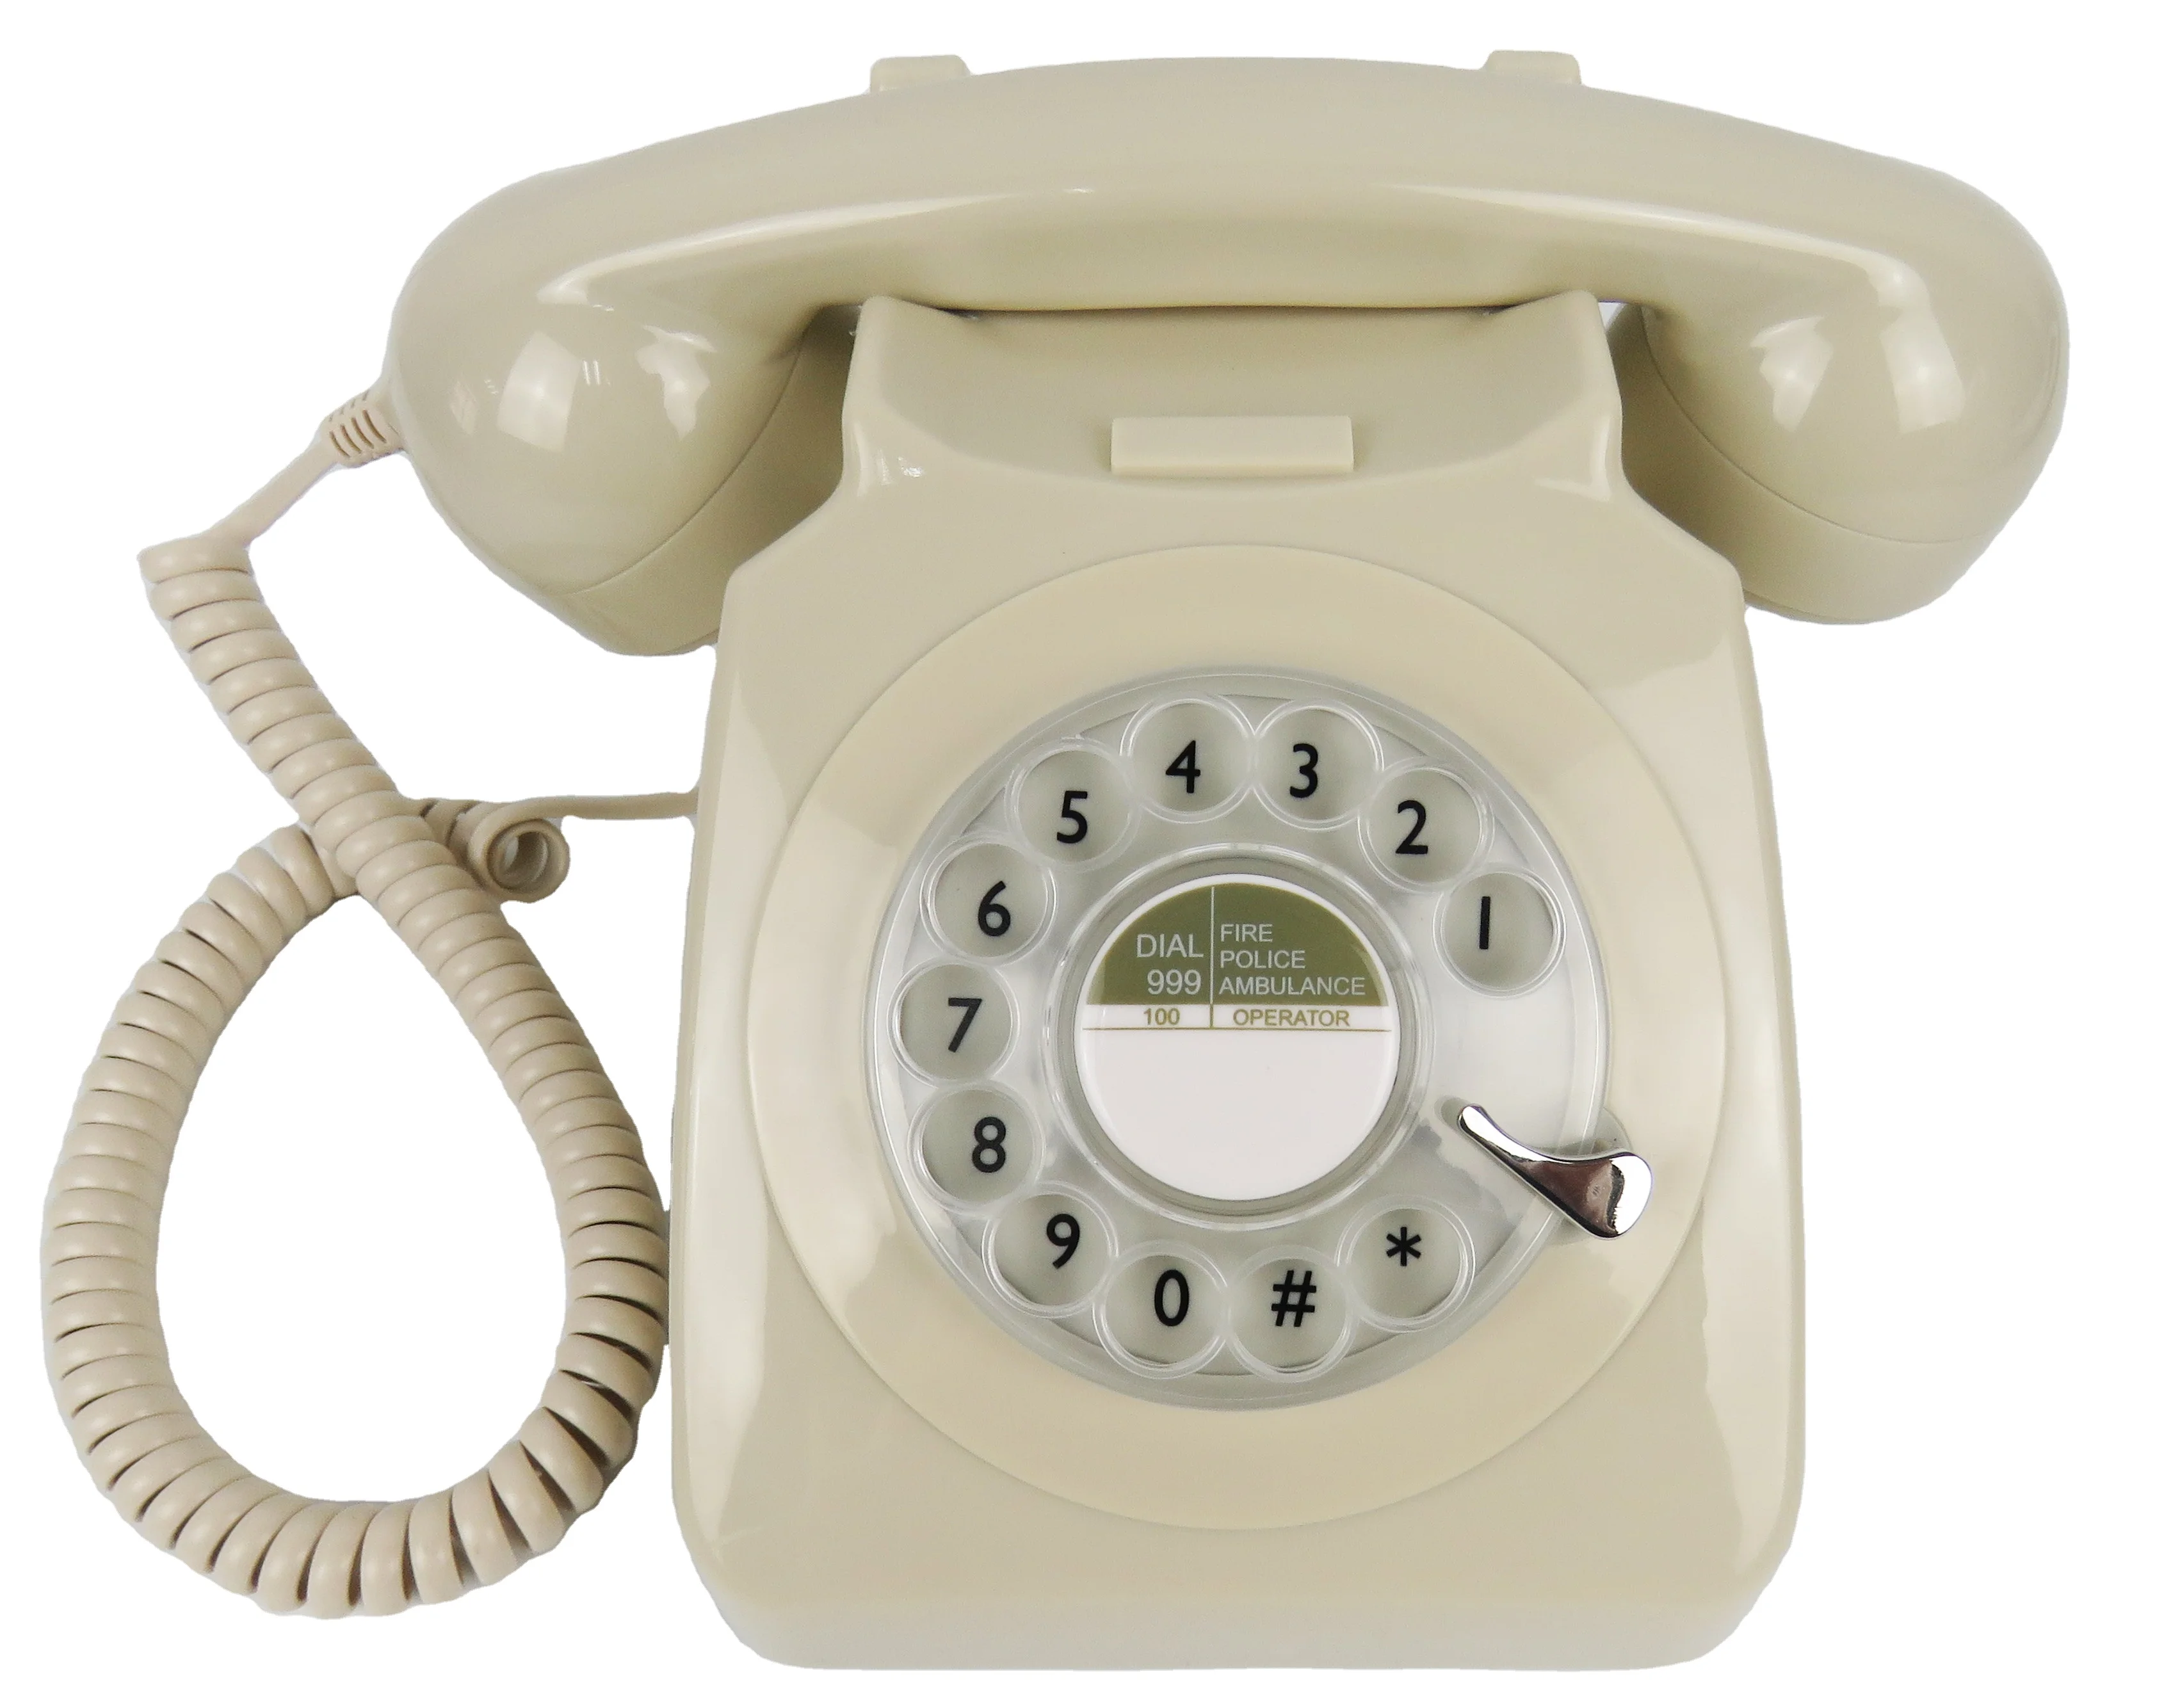 Retro Old Telephone Landline Antique Phones for Home/Office（Black） MCHEETA Retro Phone 1960's Vintage Corded Dial Phone Rotary Phone 